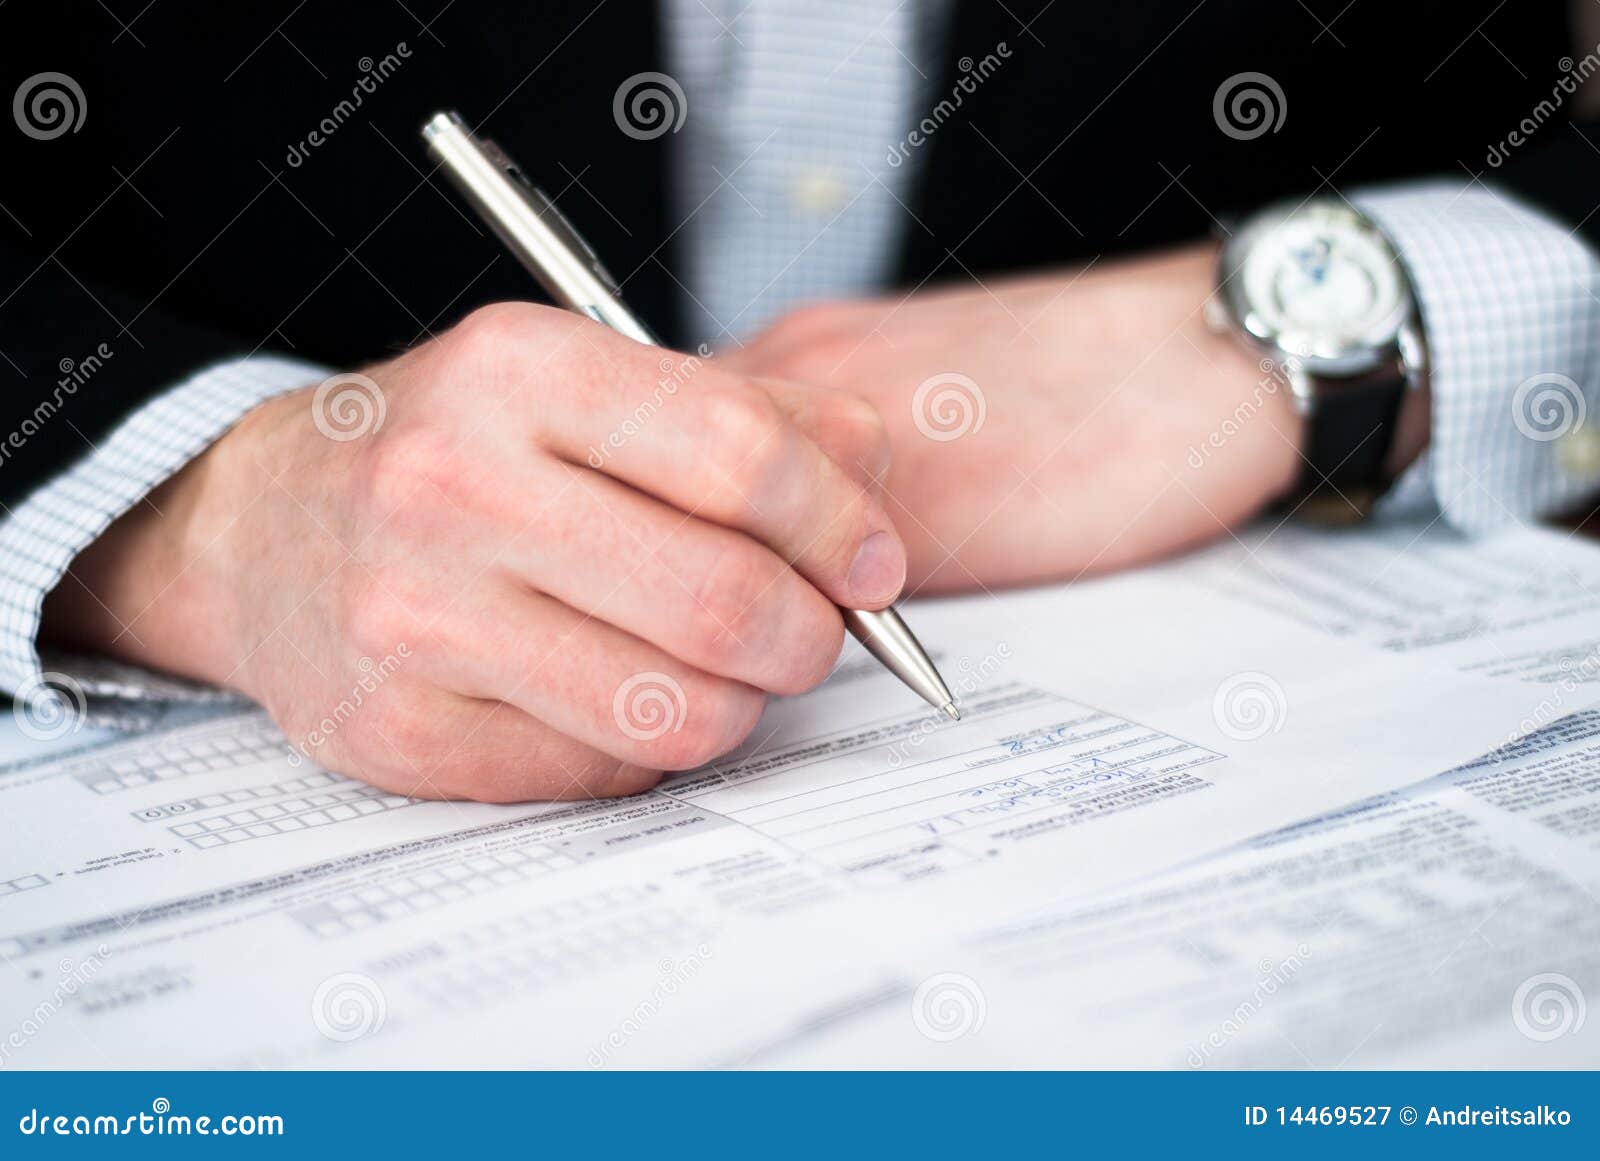 Business Men with Documents. Stock Image - Image of documentation, data: 14469527